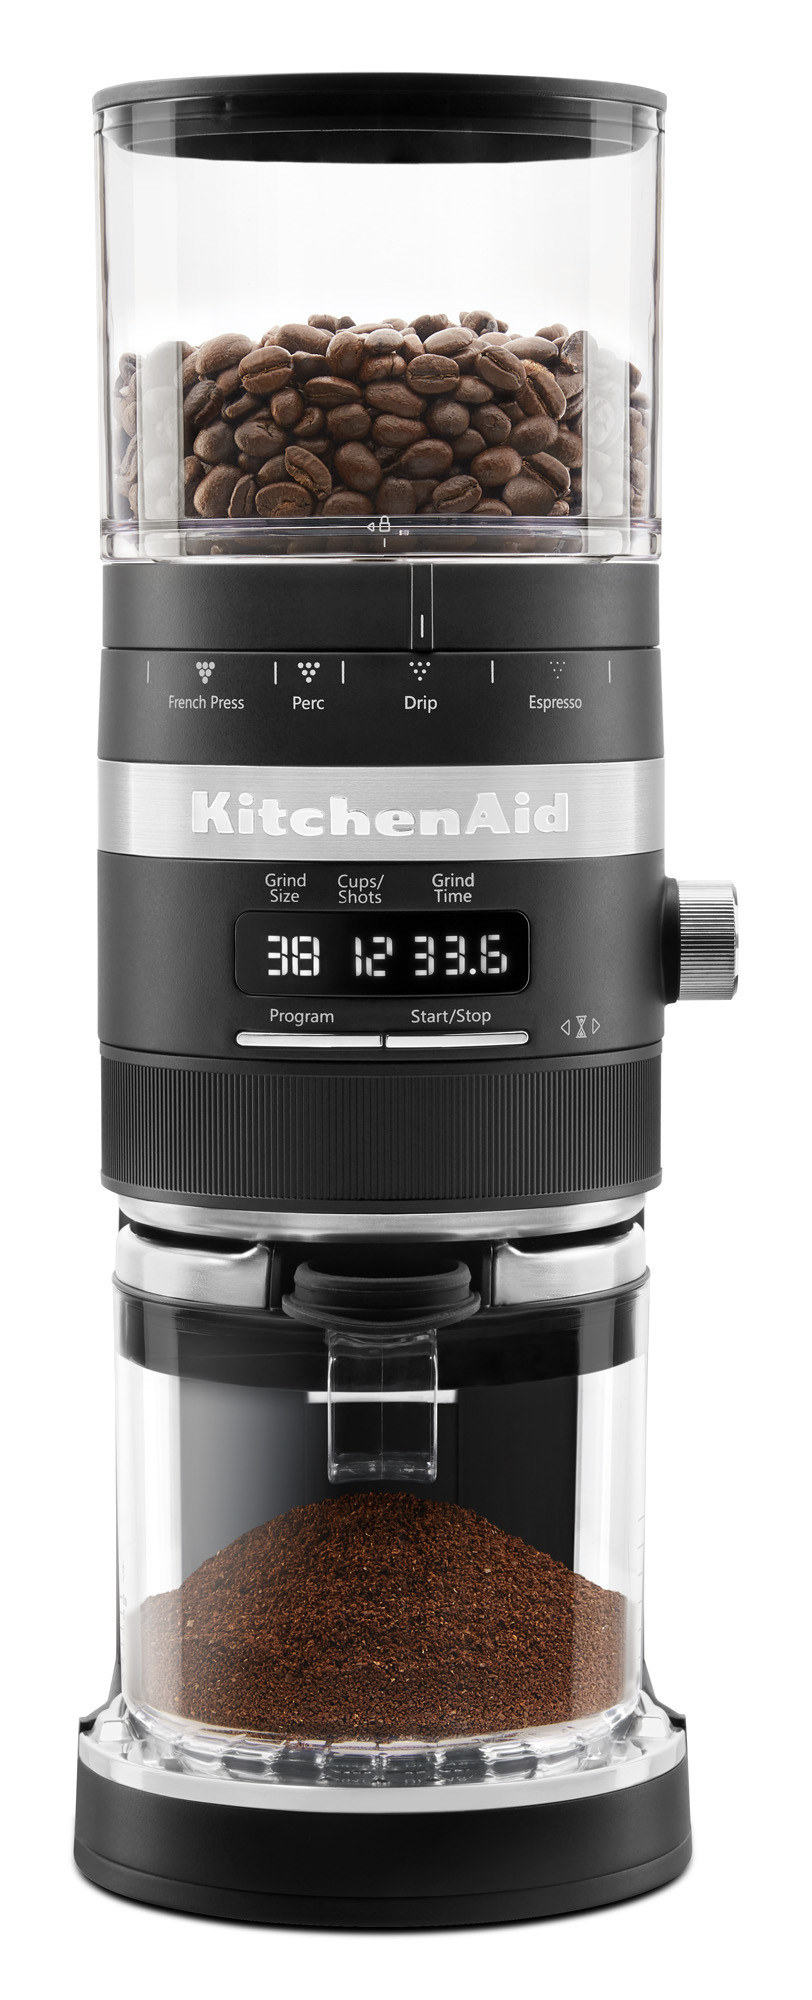 KitchenAid KCG8433 Coffee Burr Grinder featured image